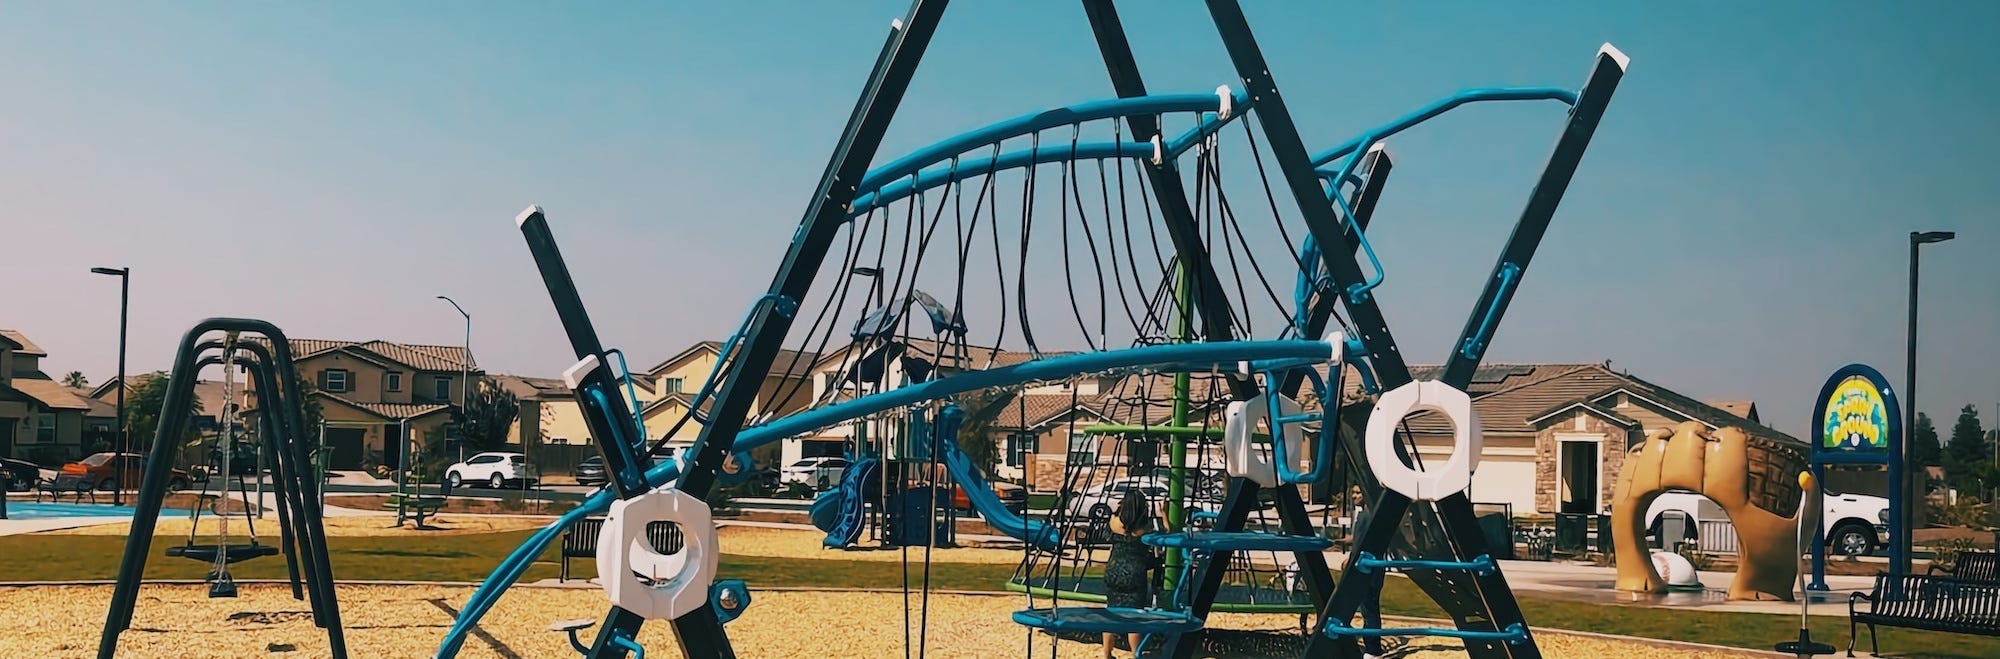 How Playground Equipment Captures the Spirit of the 21st Century